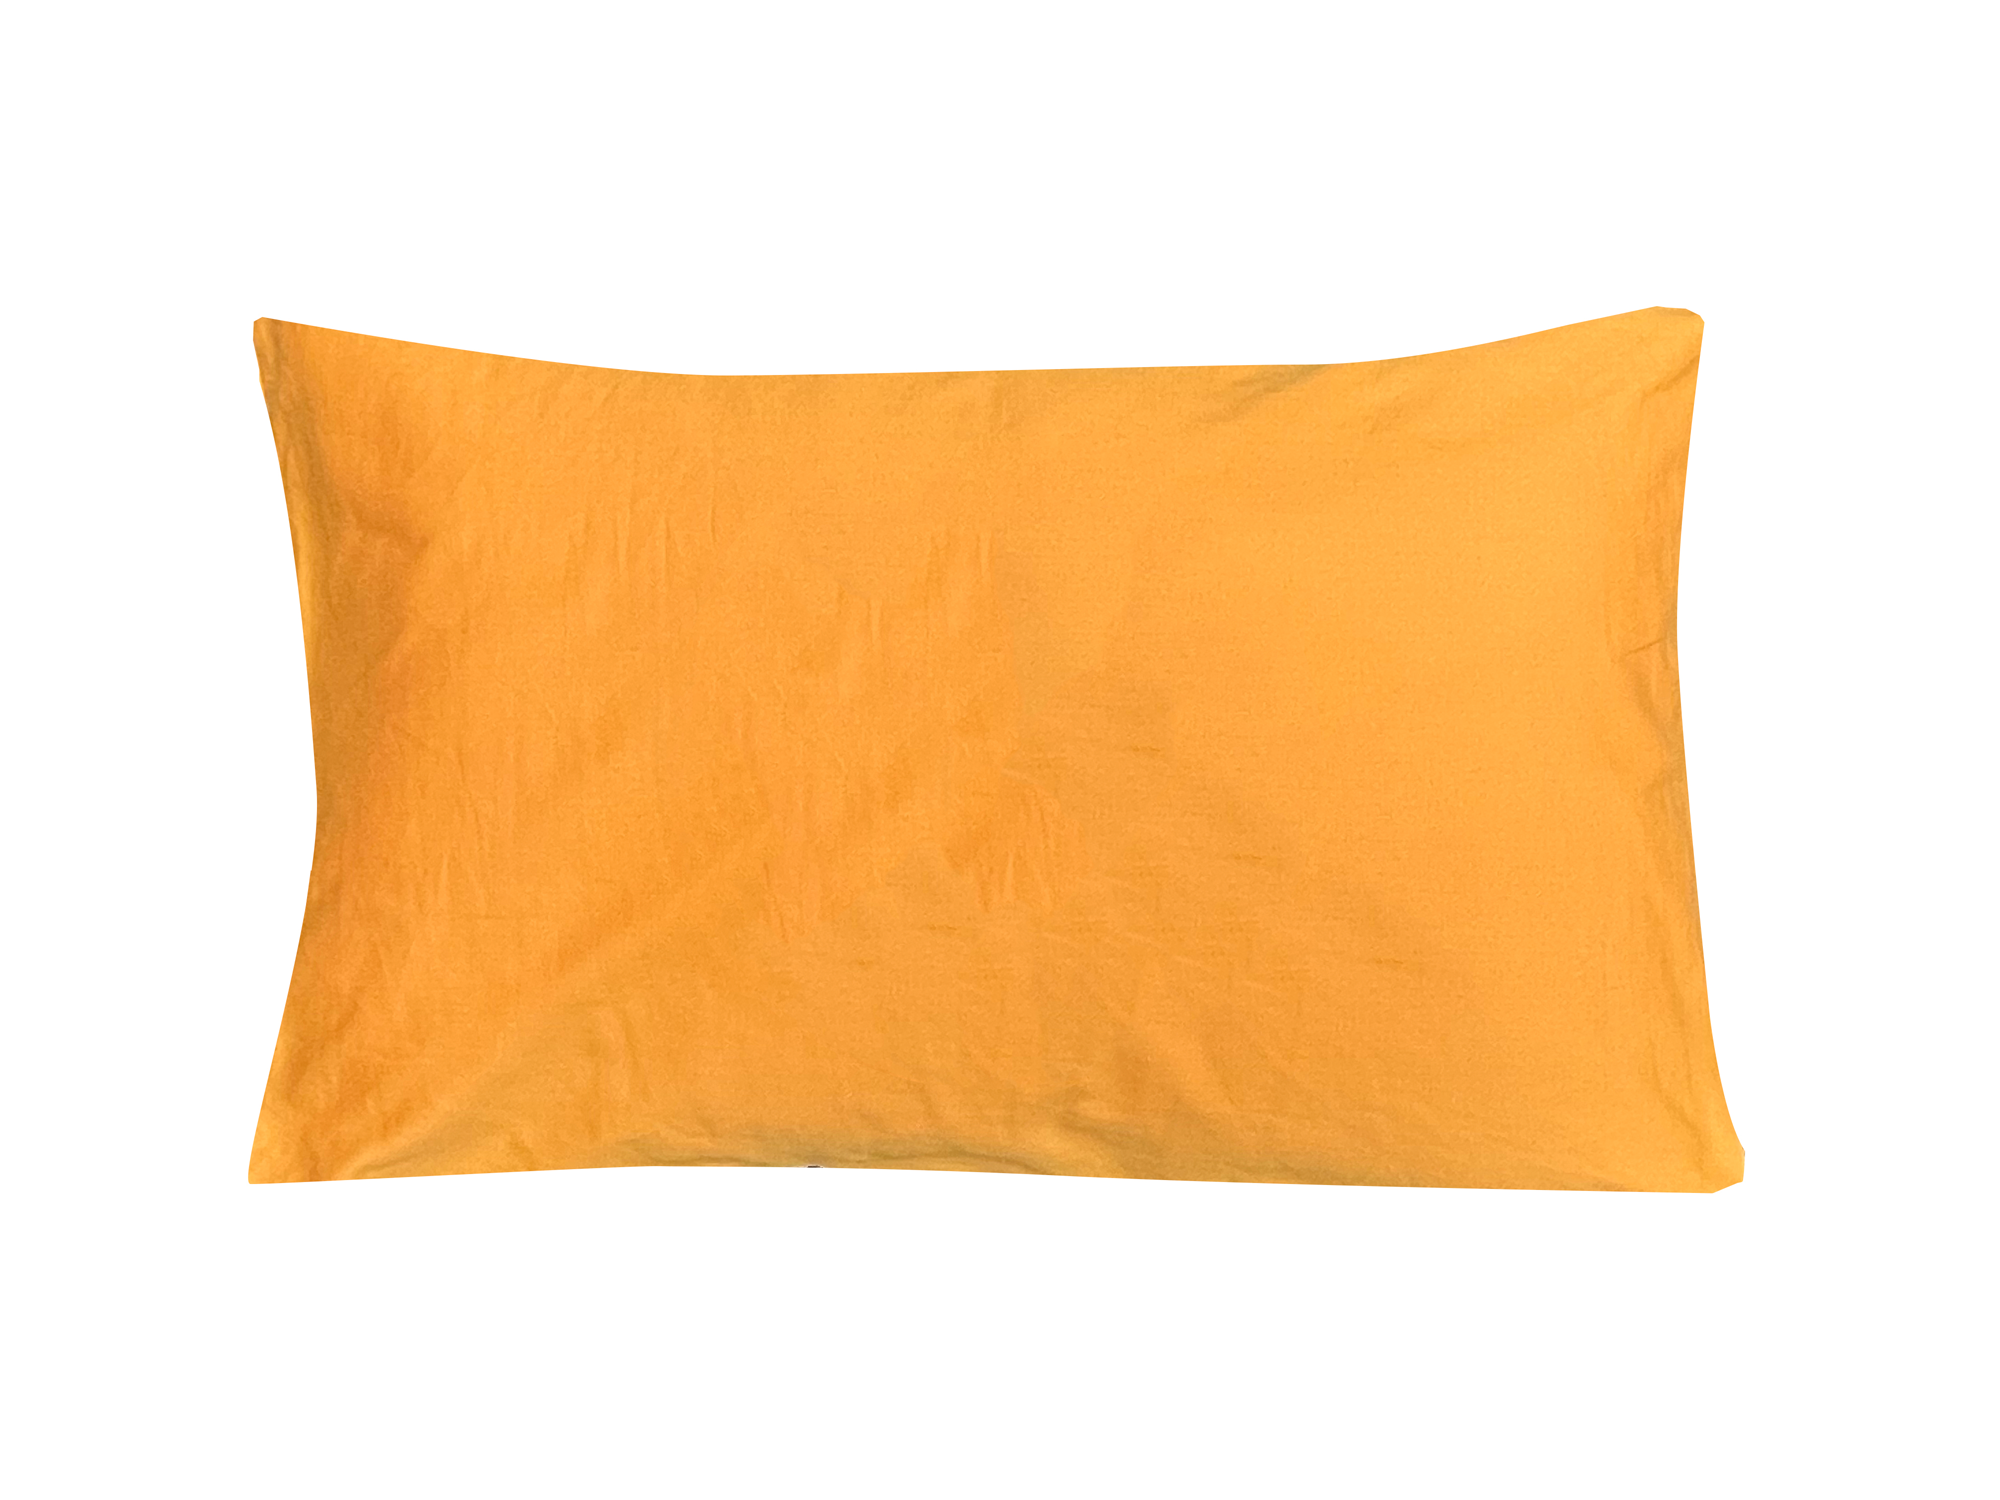 Disc-O-Bed Kissen orange